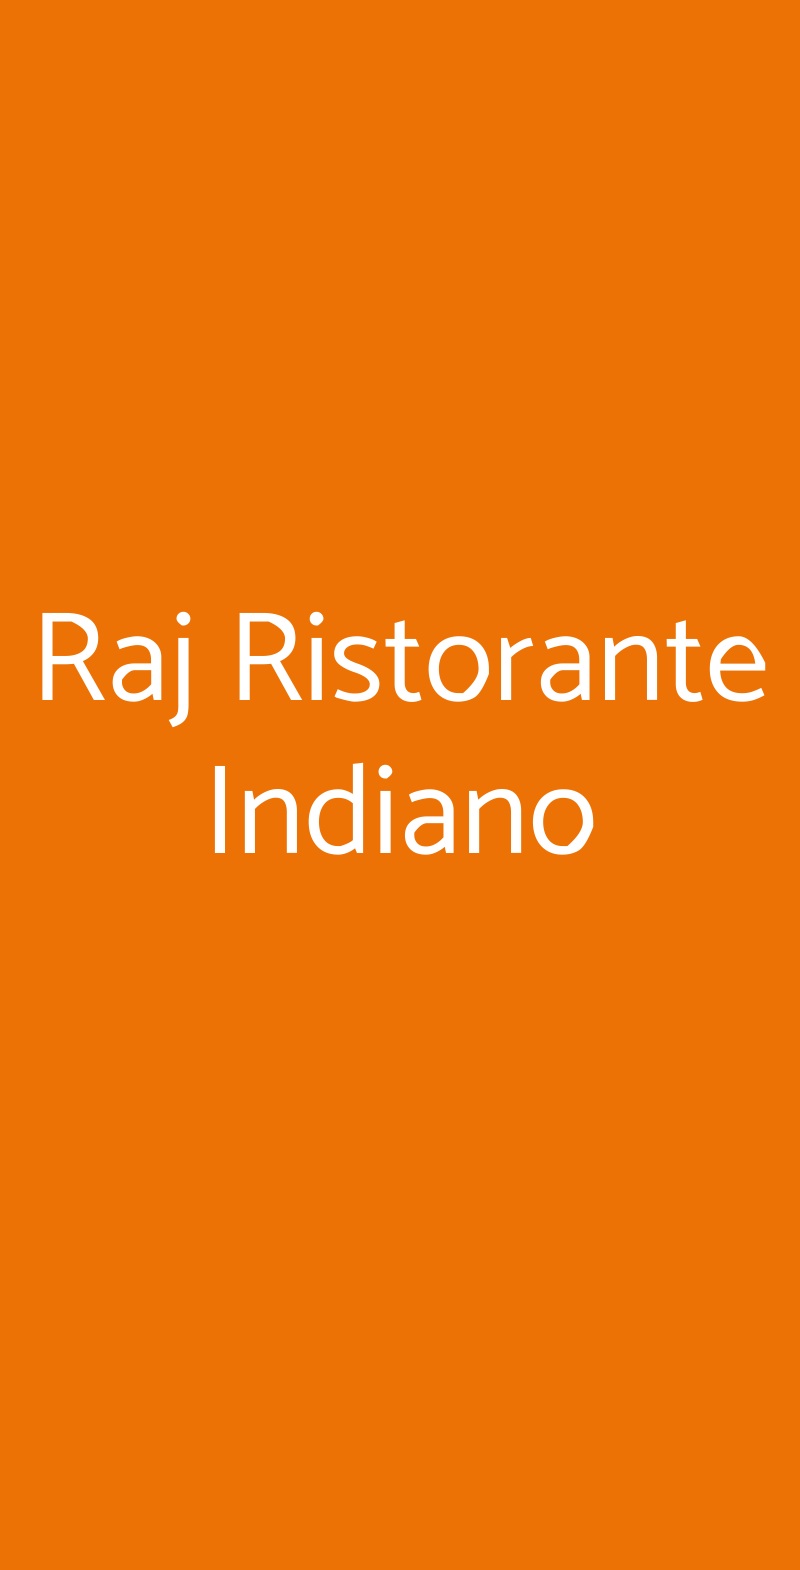 Raj Ristorante Indiano Milano menù 1 pagina